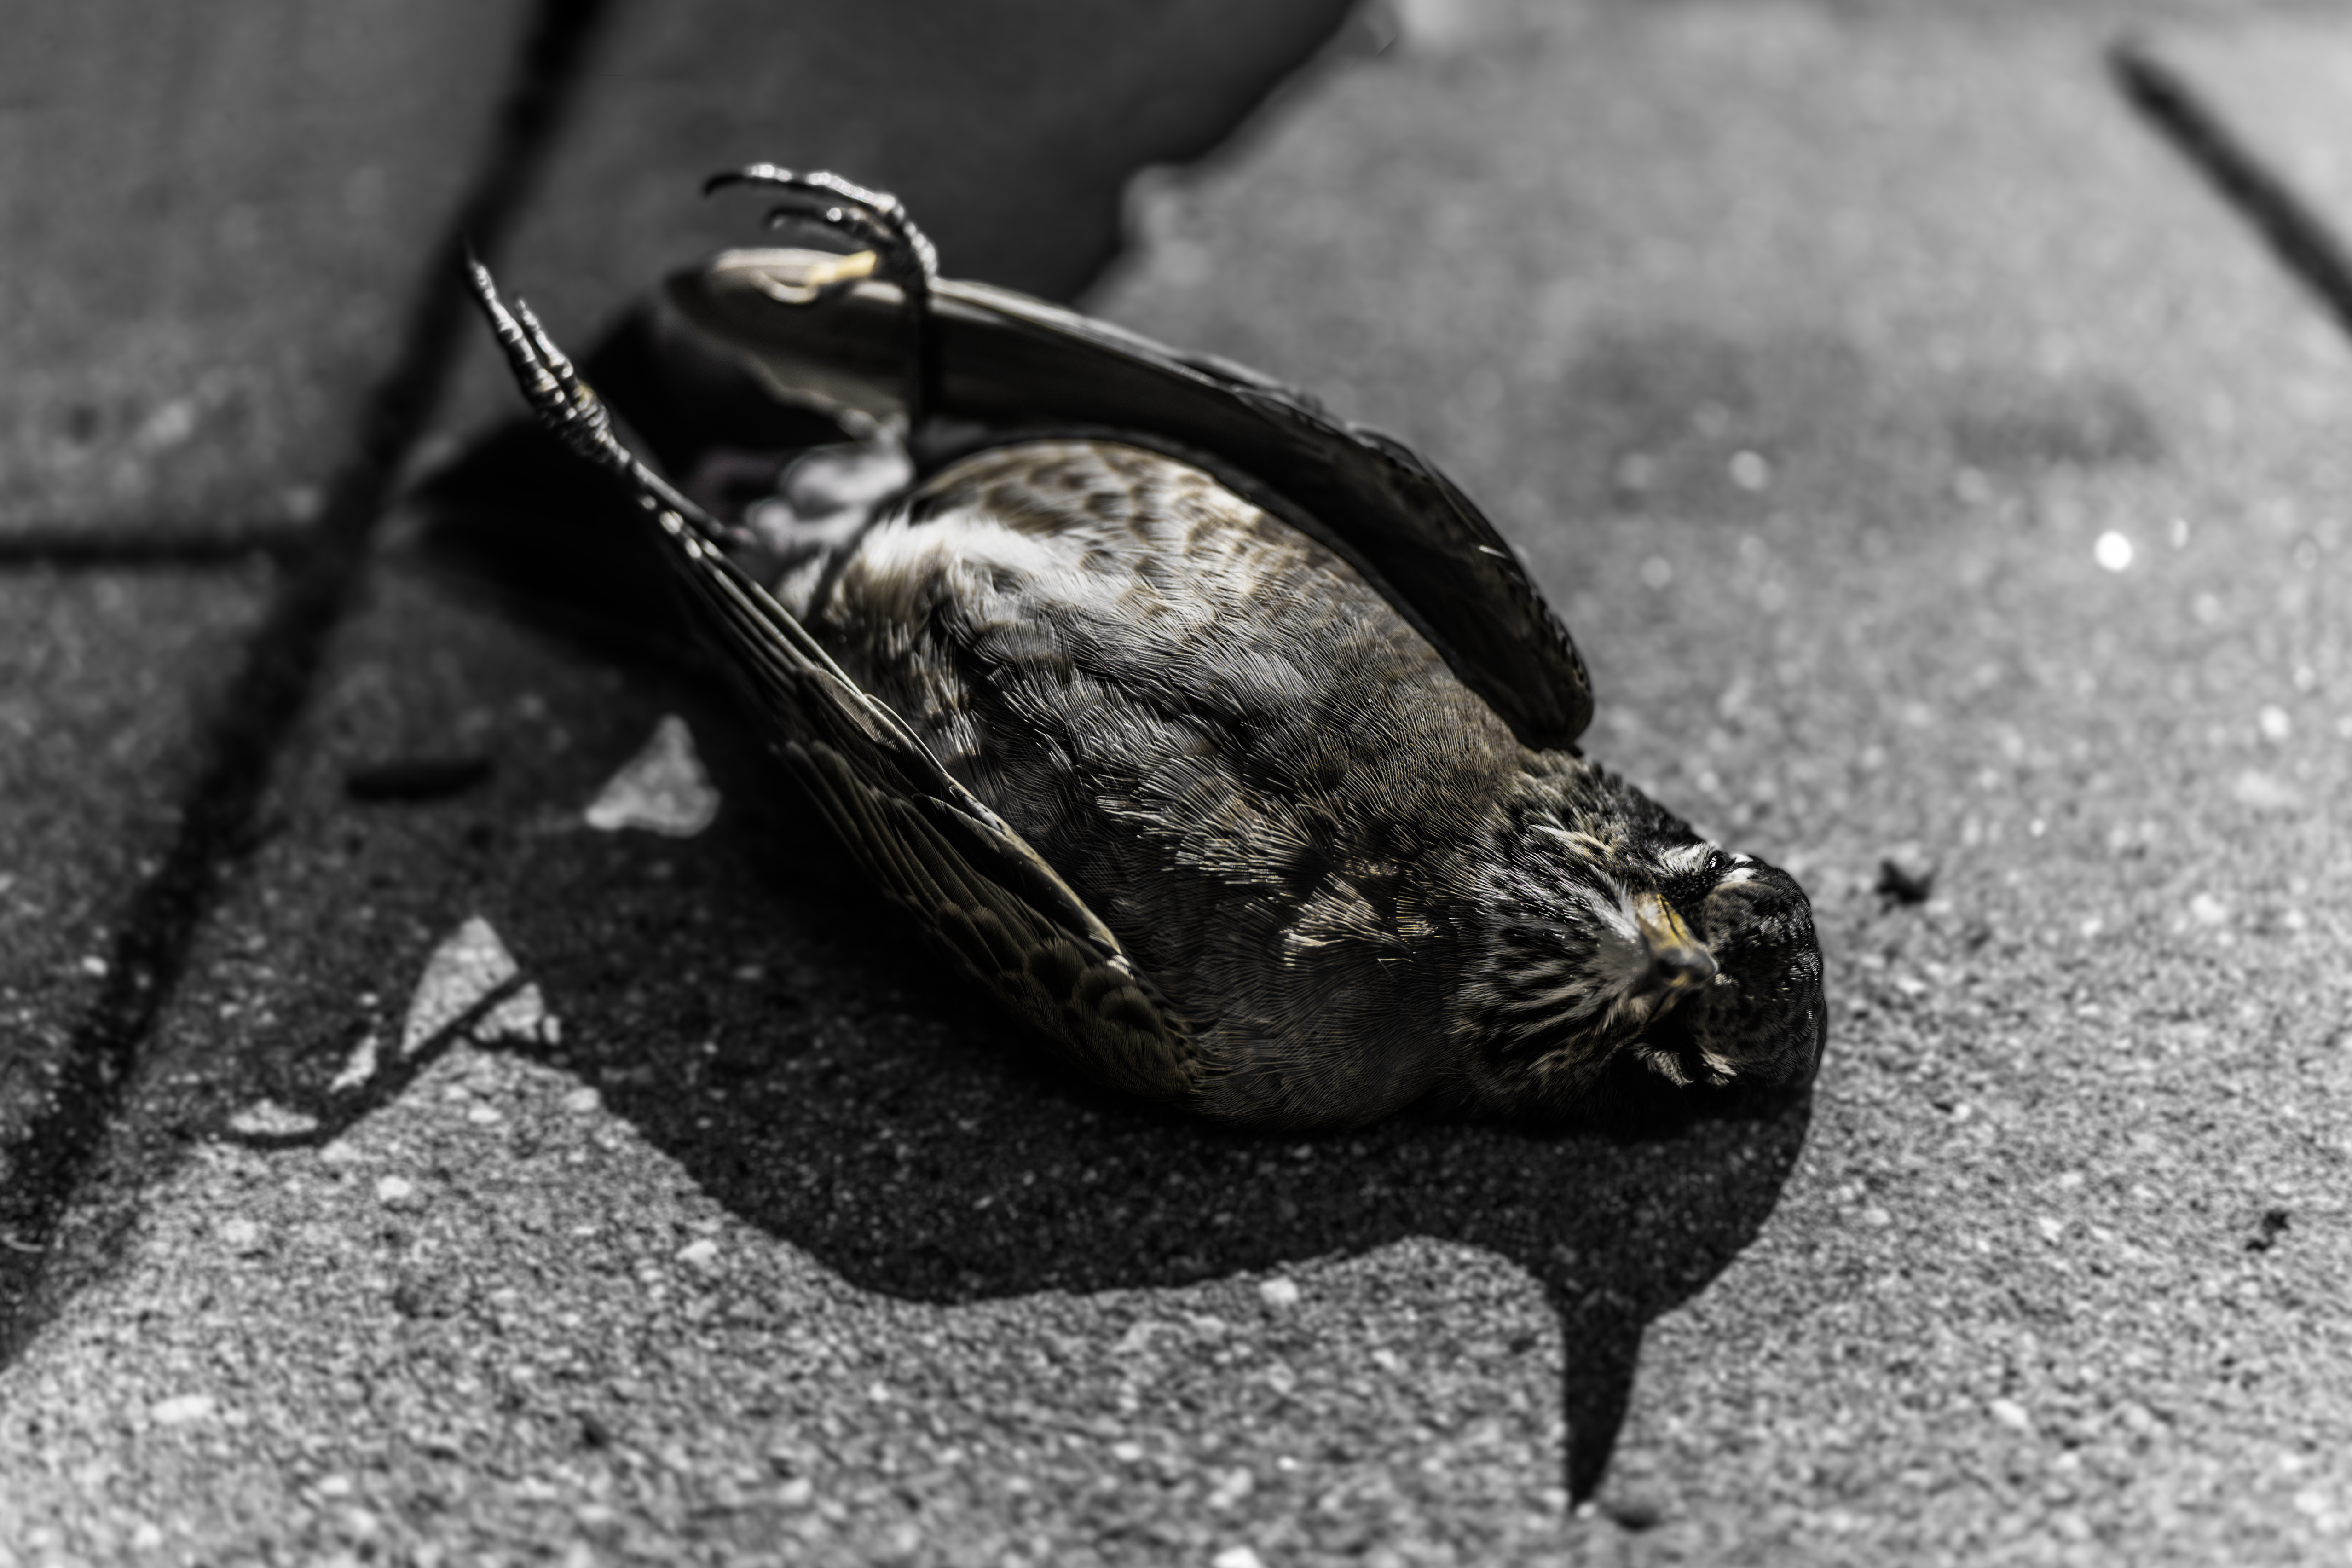 A dead black bird lying on the ground